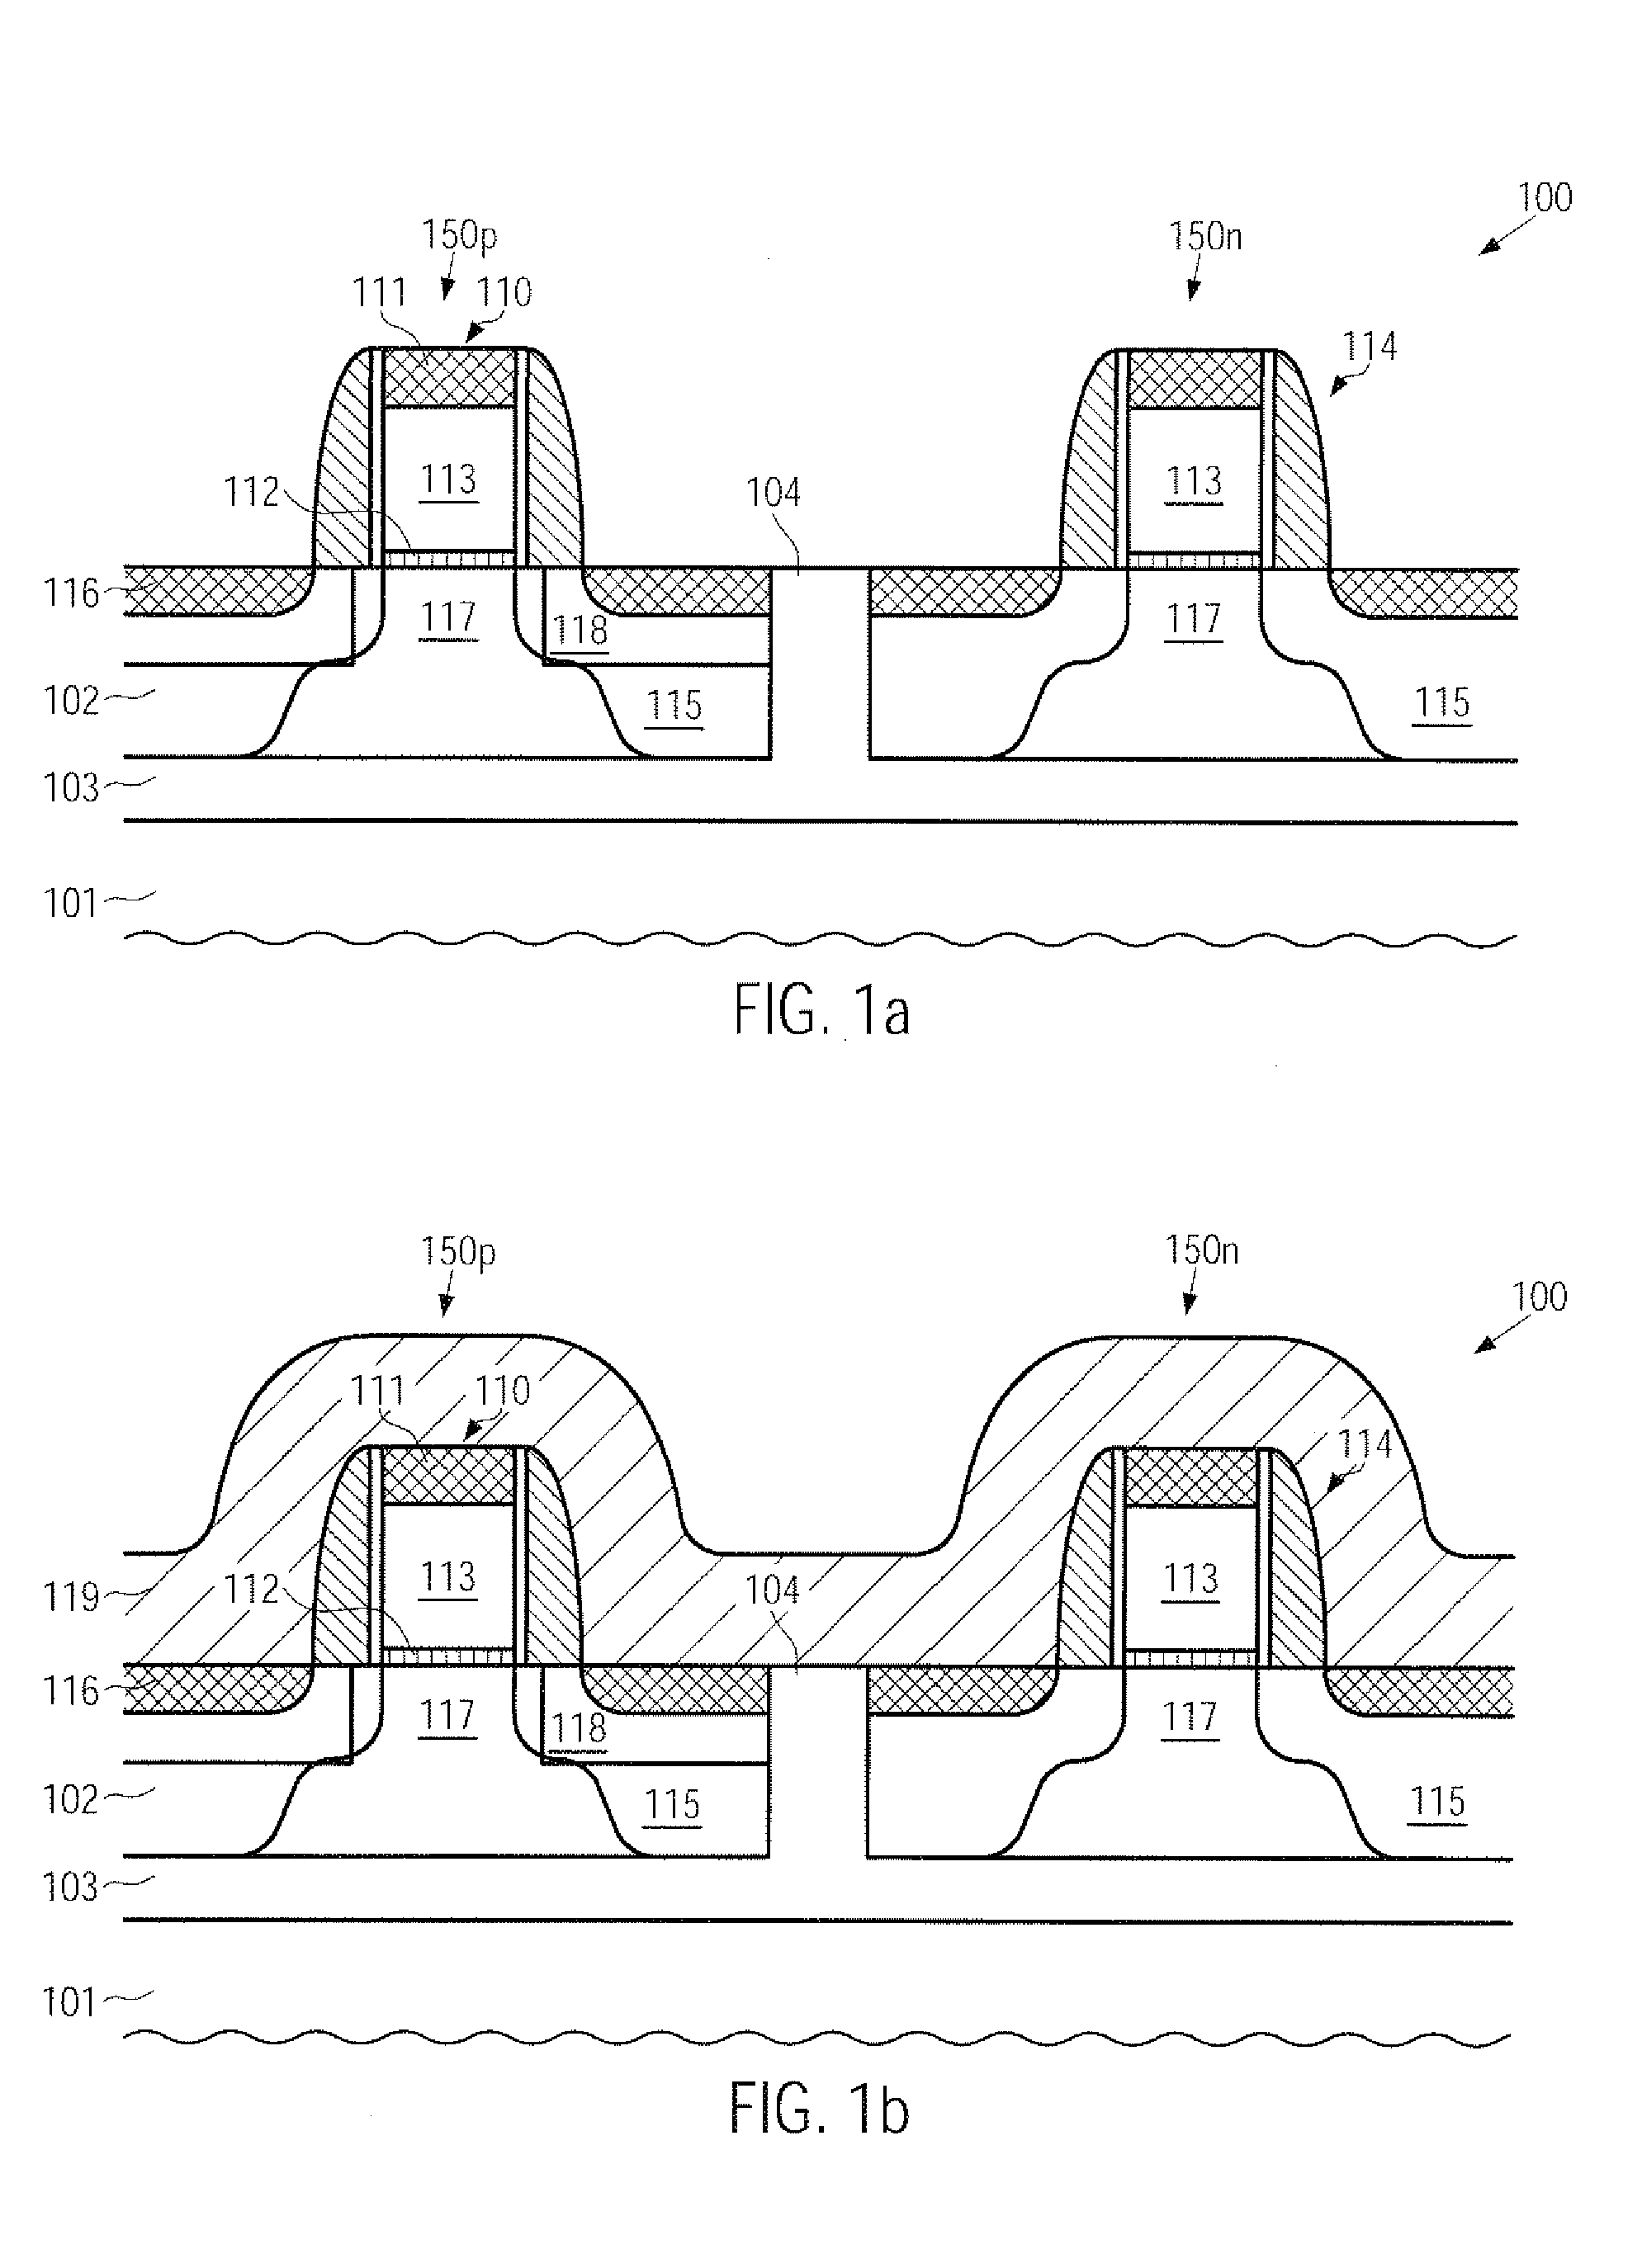 Method of forming high-k gate electrode structures after transistor fabrication